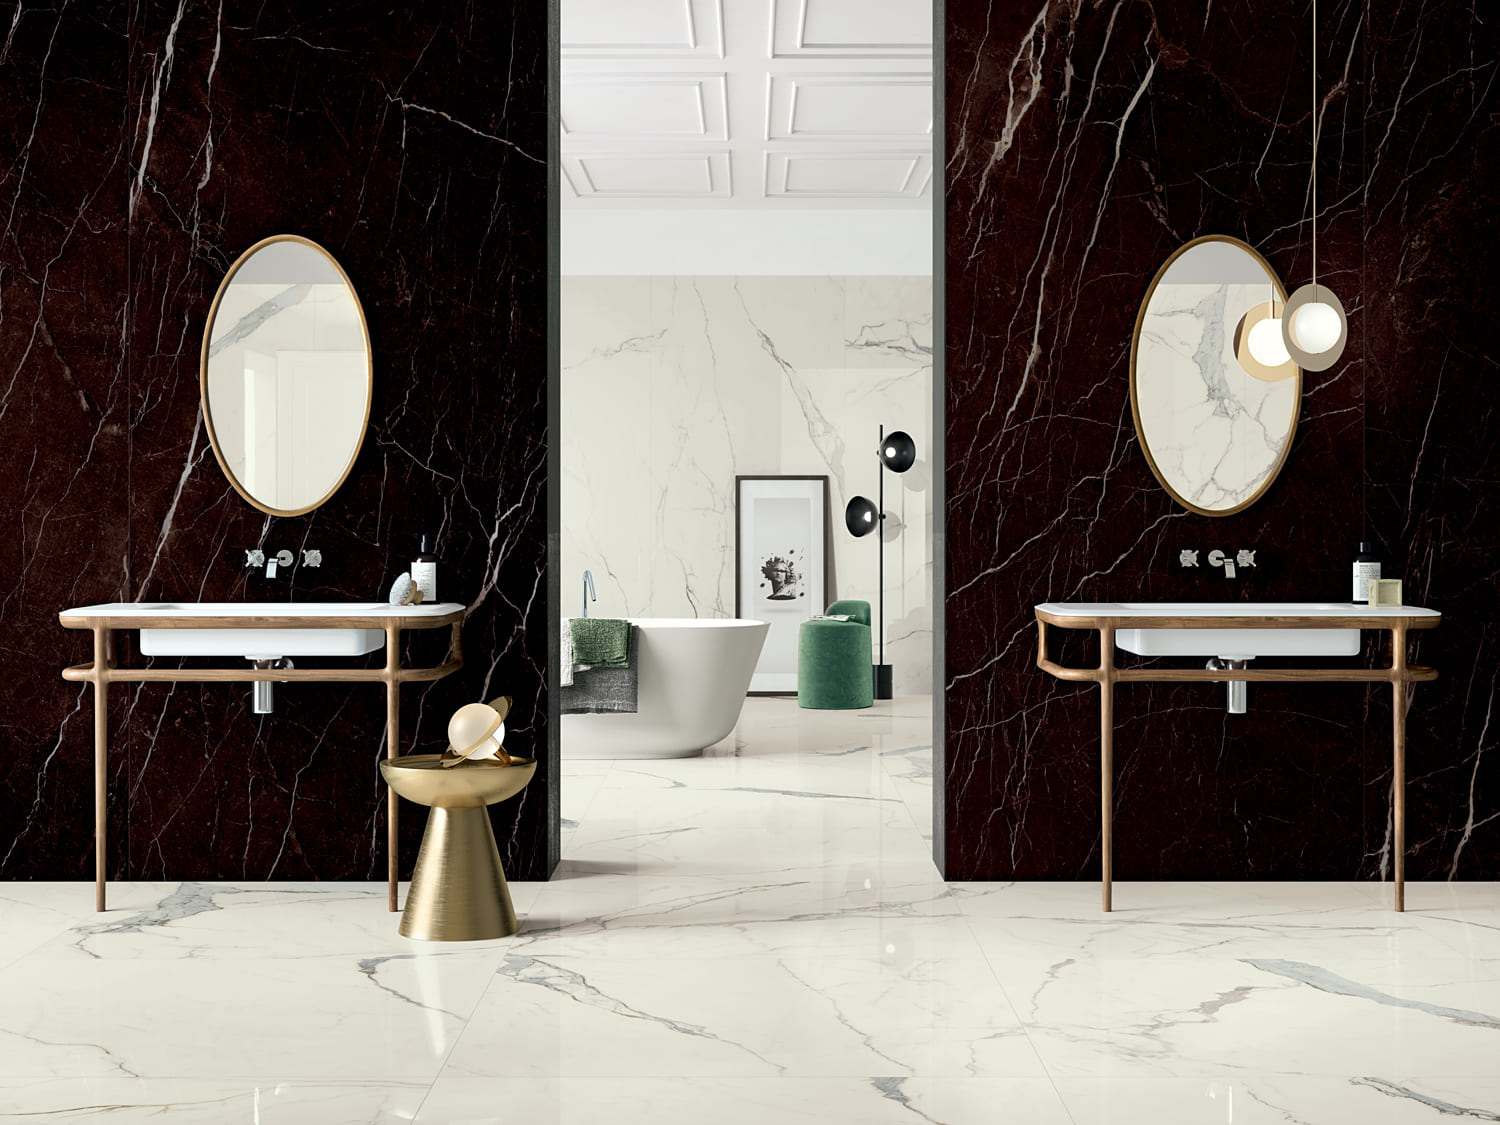 pavimenti-rivestimenti-effetto-marmo-cotto-deste-8592_z_CDE-vanity-biancostatuario-glossy-vanity-darkbrown-glossy-bathroom-001-fratelli-nero